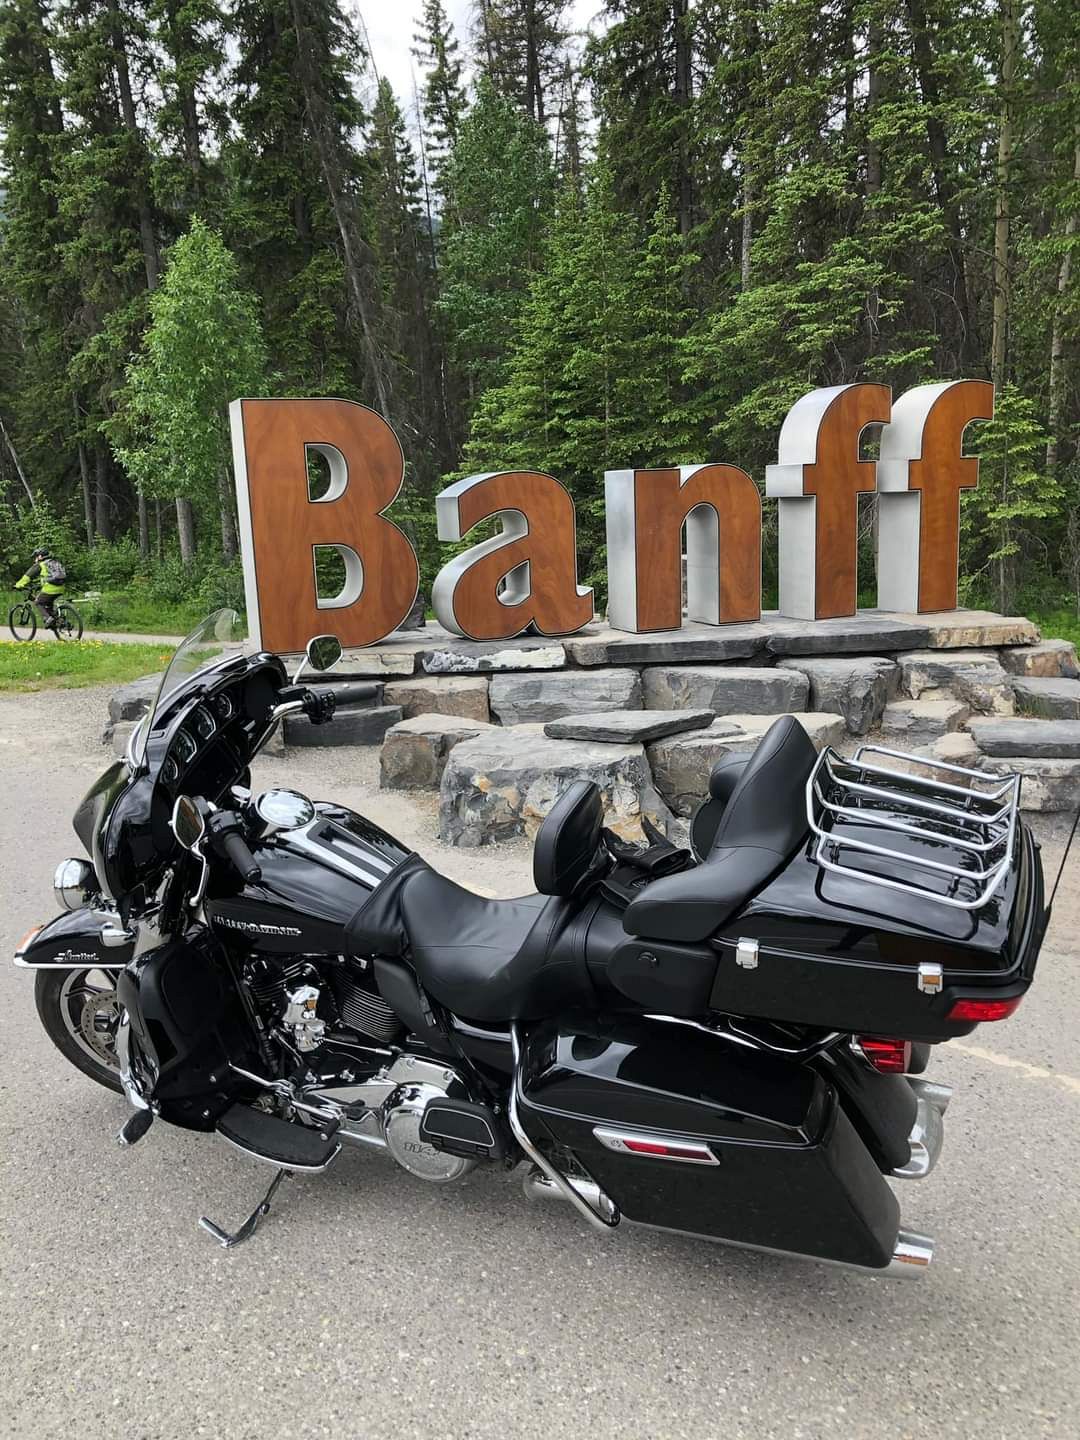 Banff Sign with Harley-Davidson